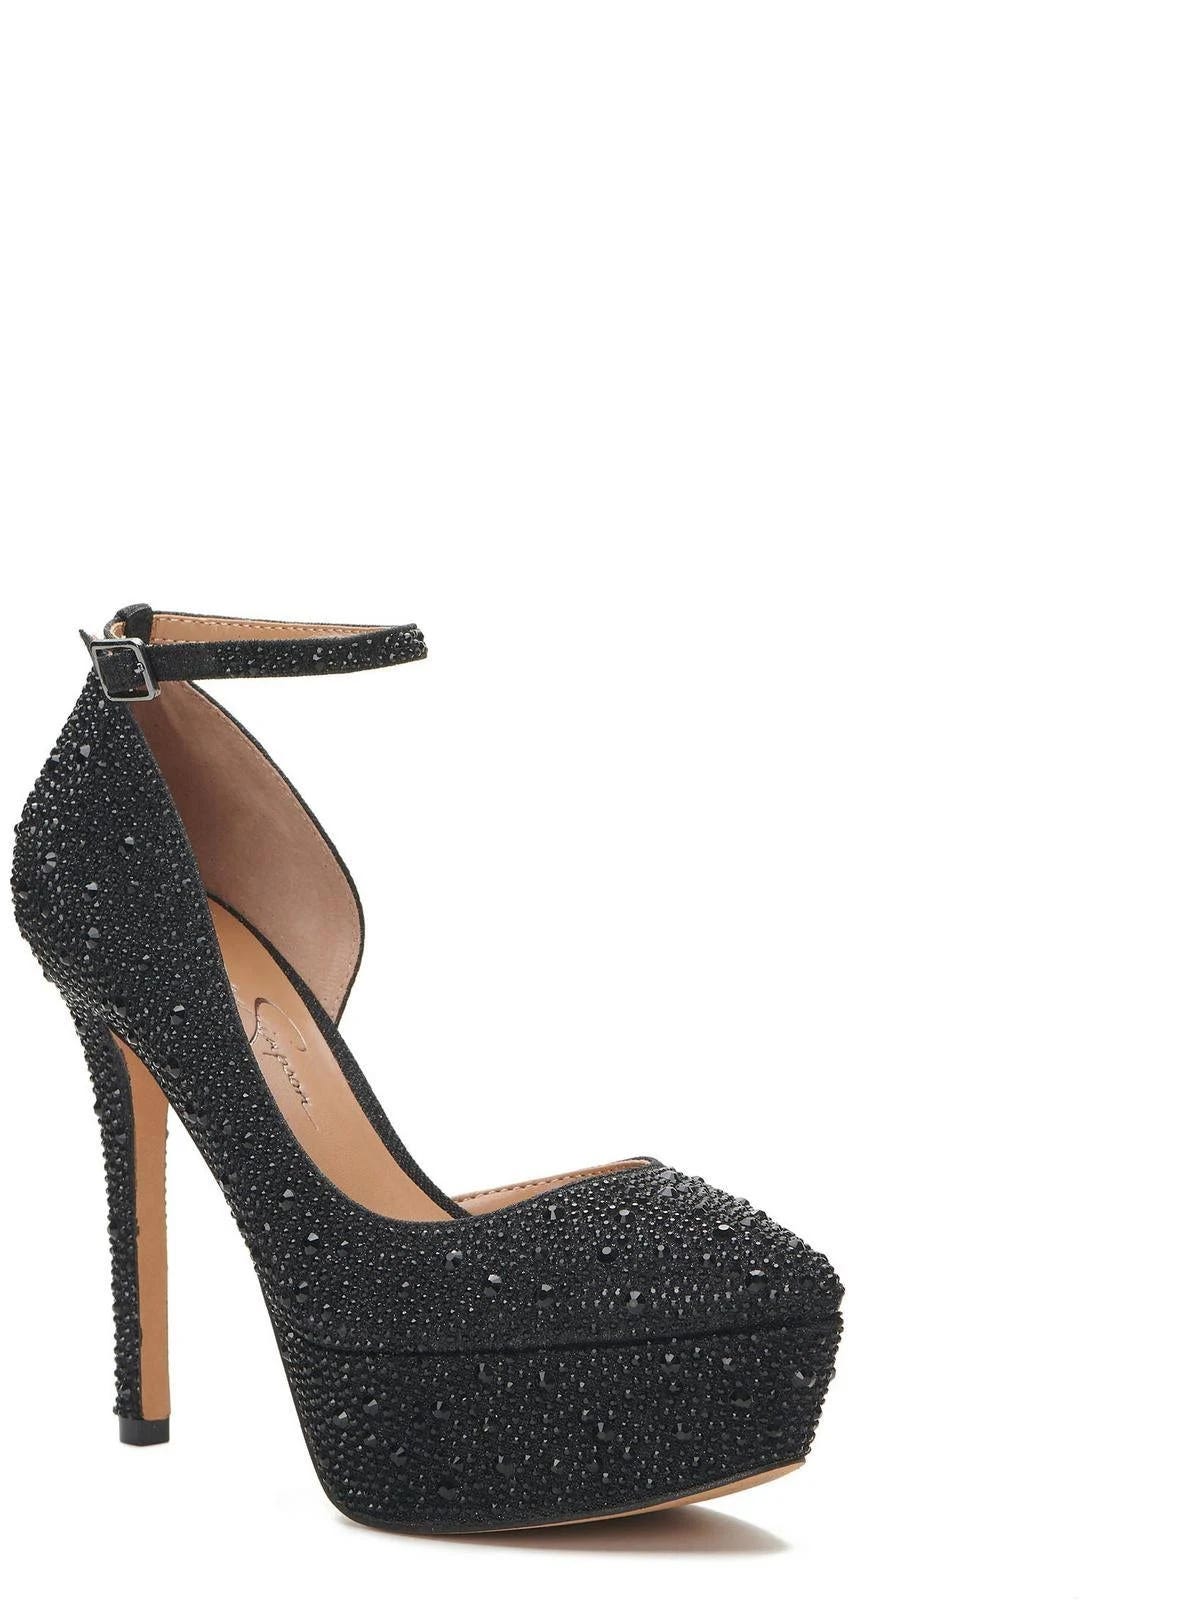 Jessica Simpson Ormanda Black Stiletto Platform Pumps - Fashionable Tall Heels | Image